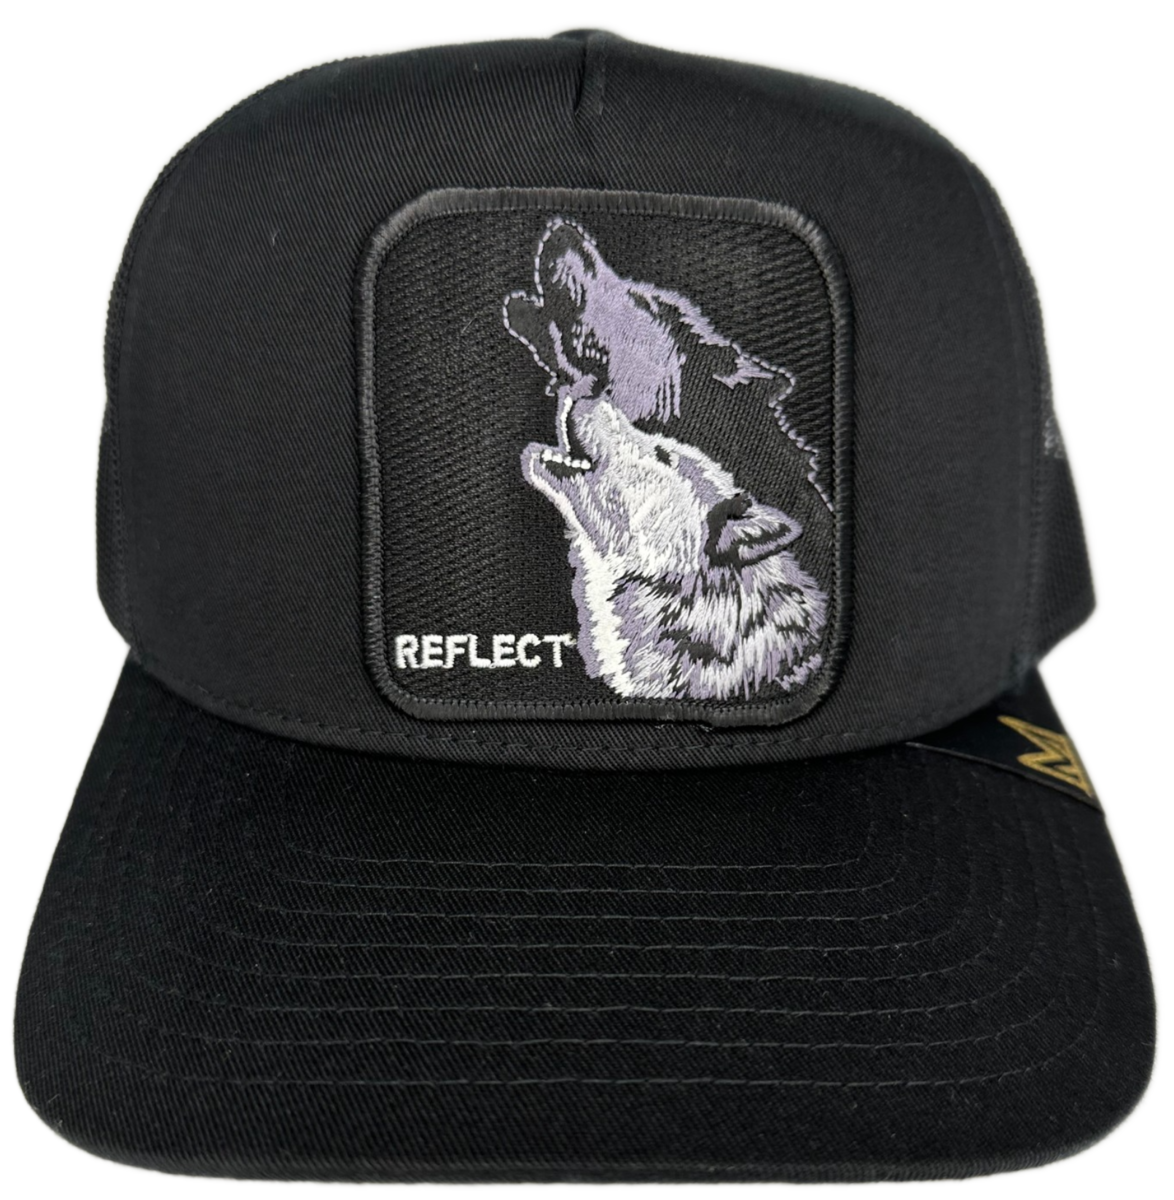 MV Dad Hats - Reflect Trucker Hat - Black/Black